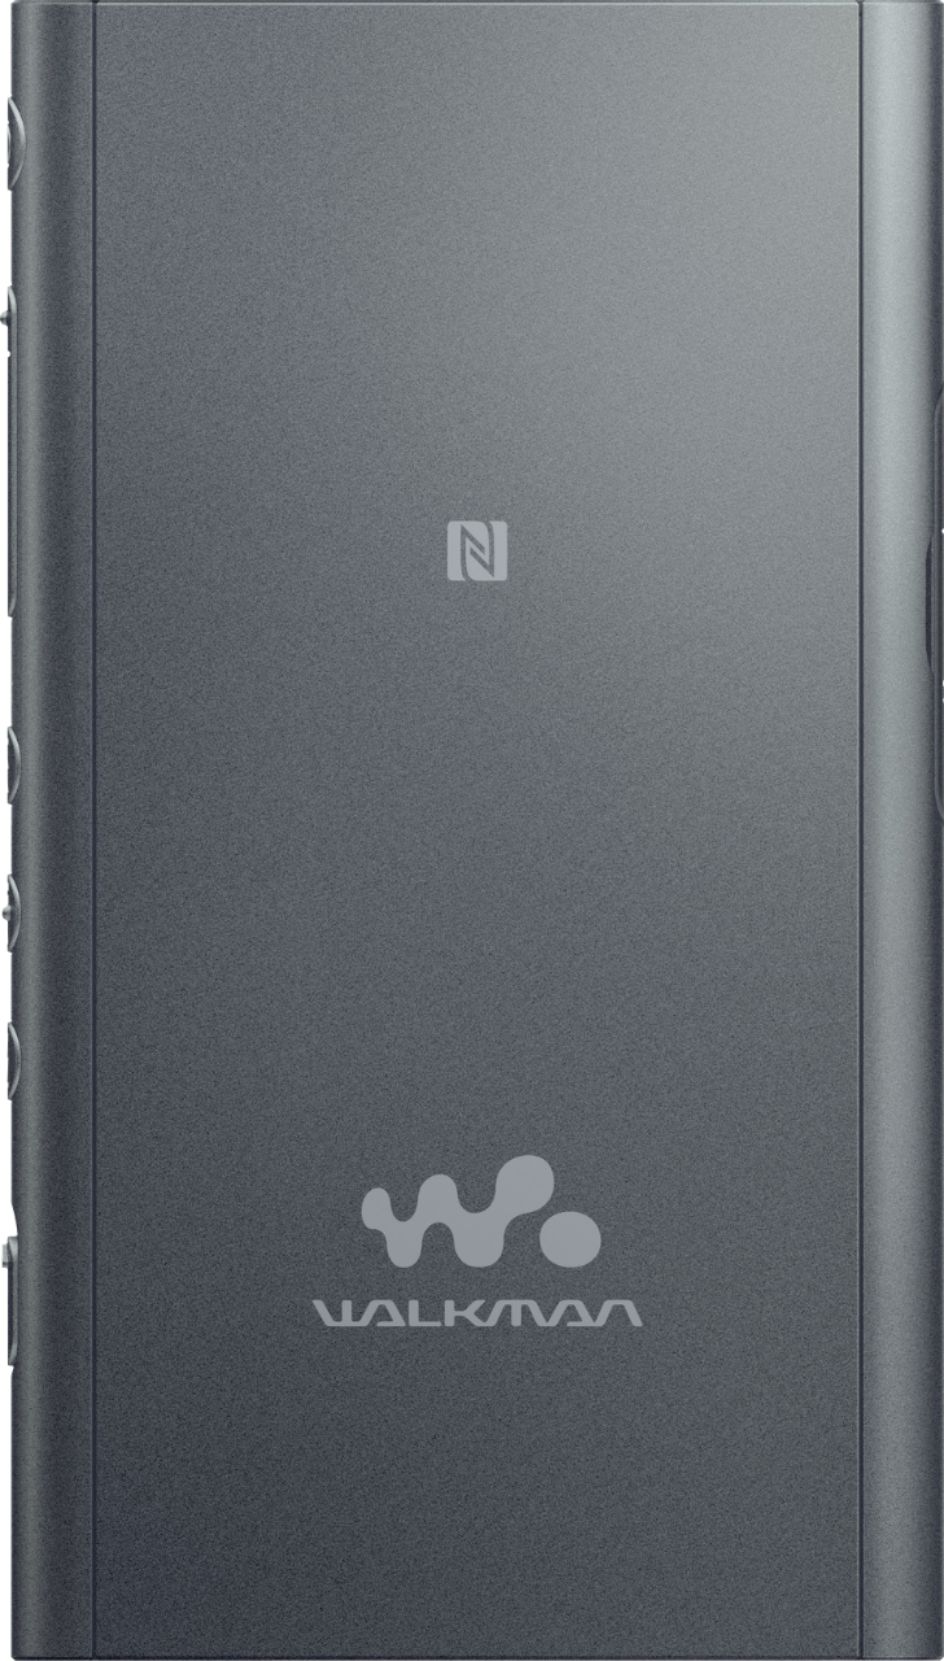 Sony Walkman NW-A55 16GB High Resolution Audio Player Black